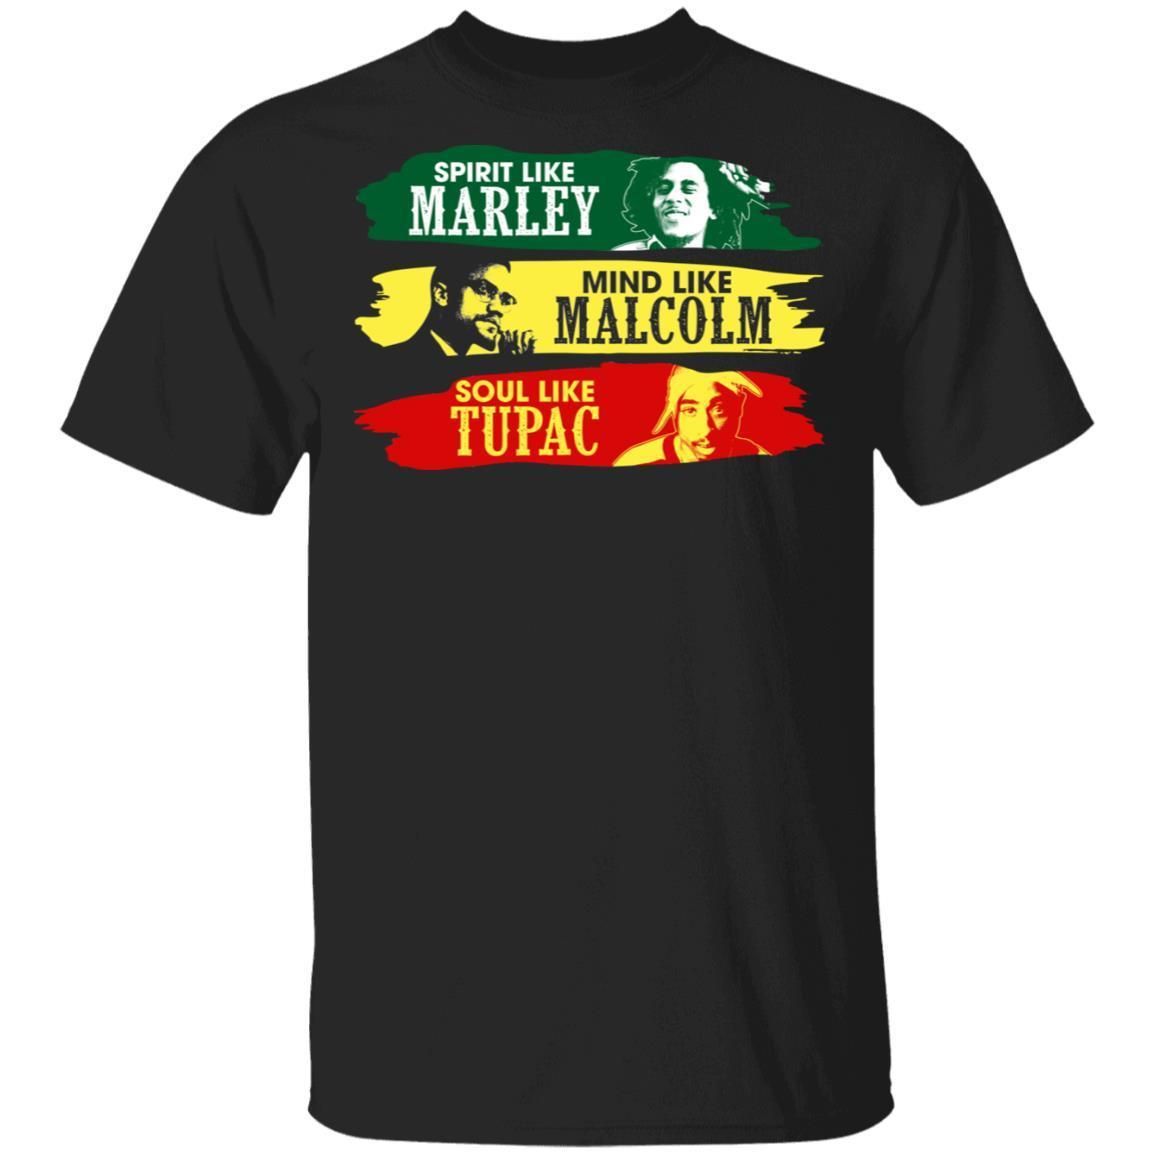 Spirit Like Marley, Mind Like Malcolm, Soul Like Tupac T-shirt PAN2DSET0011